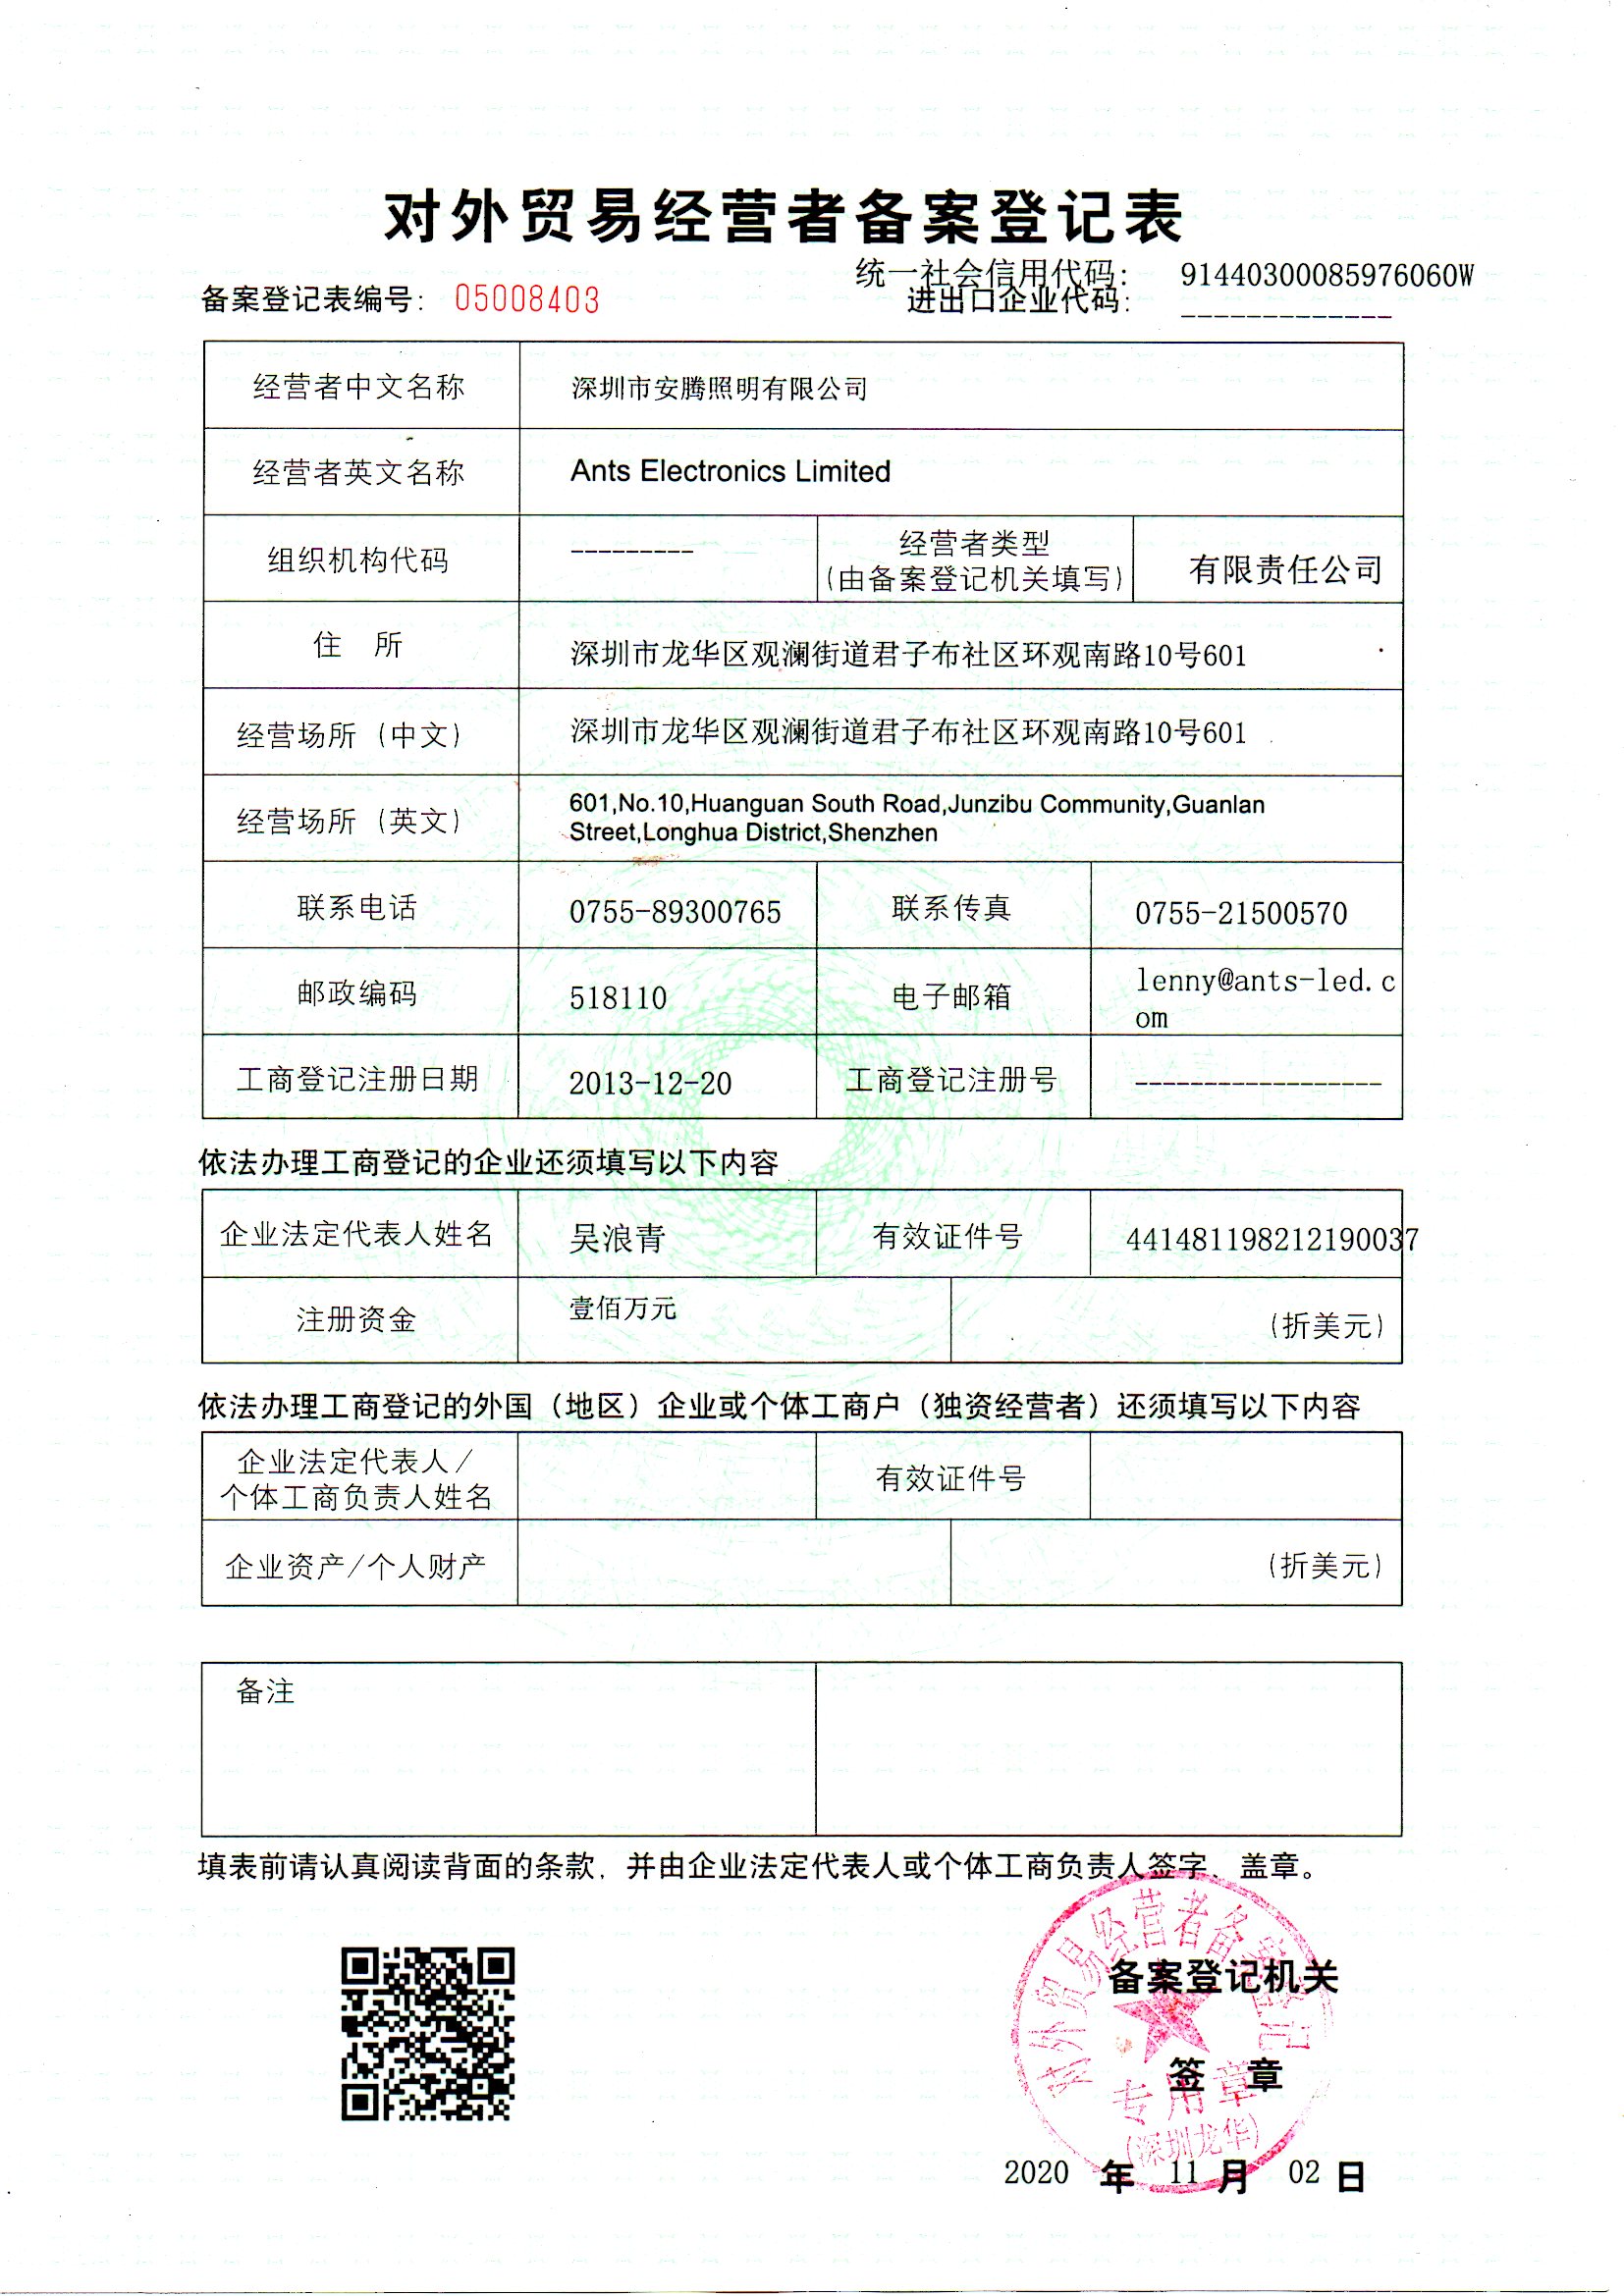 Export Registration at China Customs